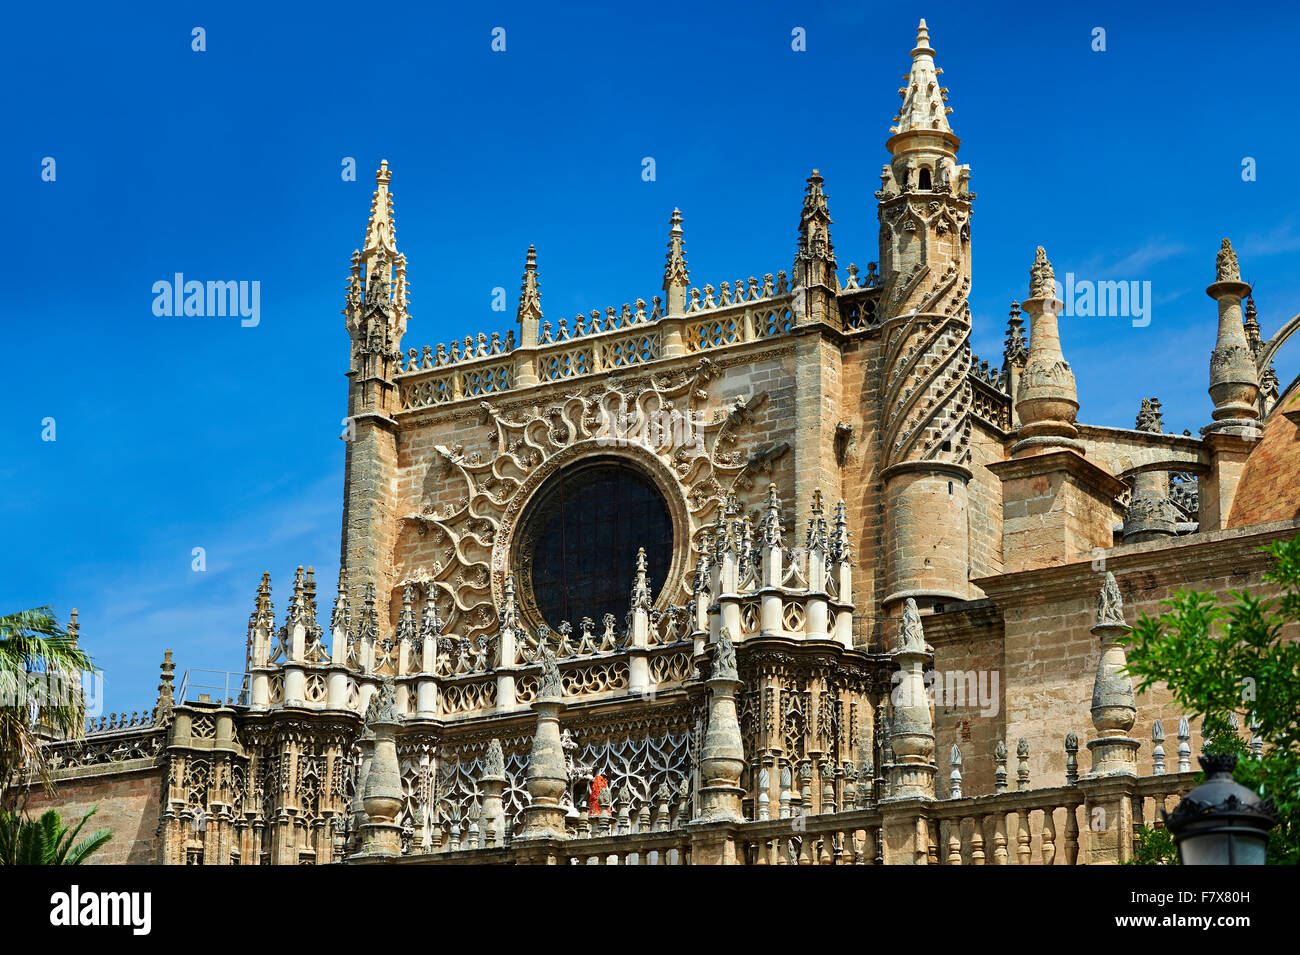 La arquitectura gótica de la Catedral de Sevilla, España Foto de stock